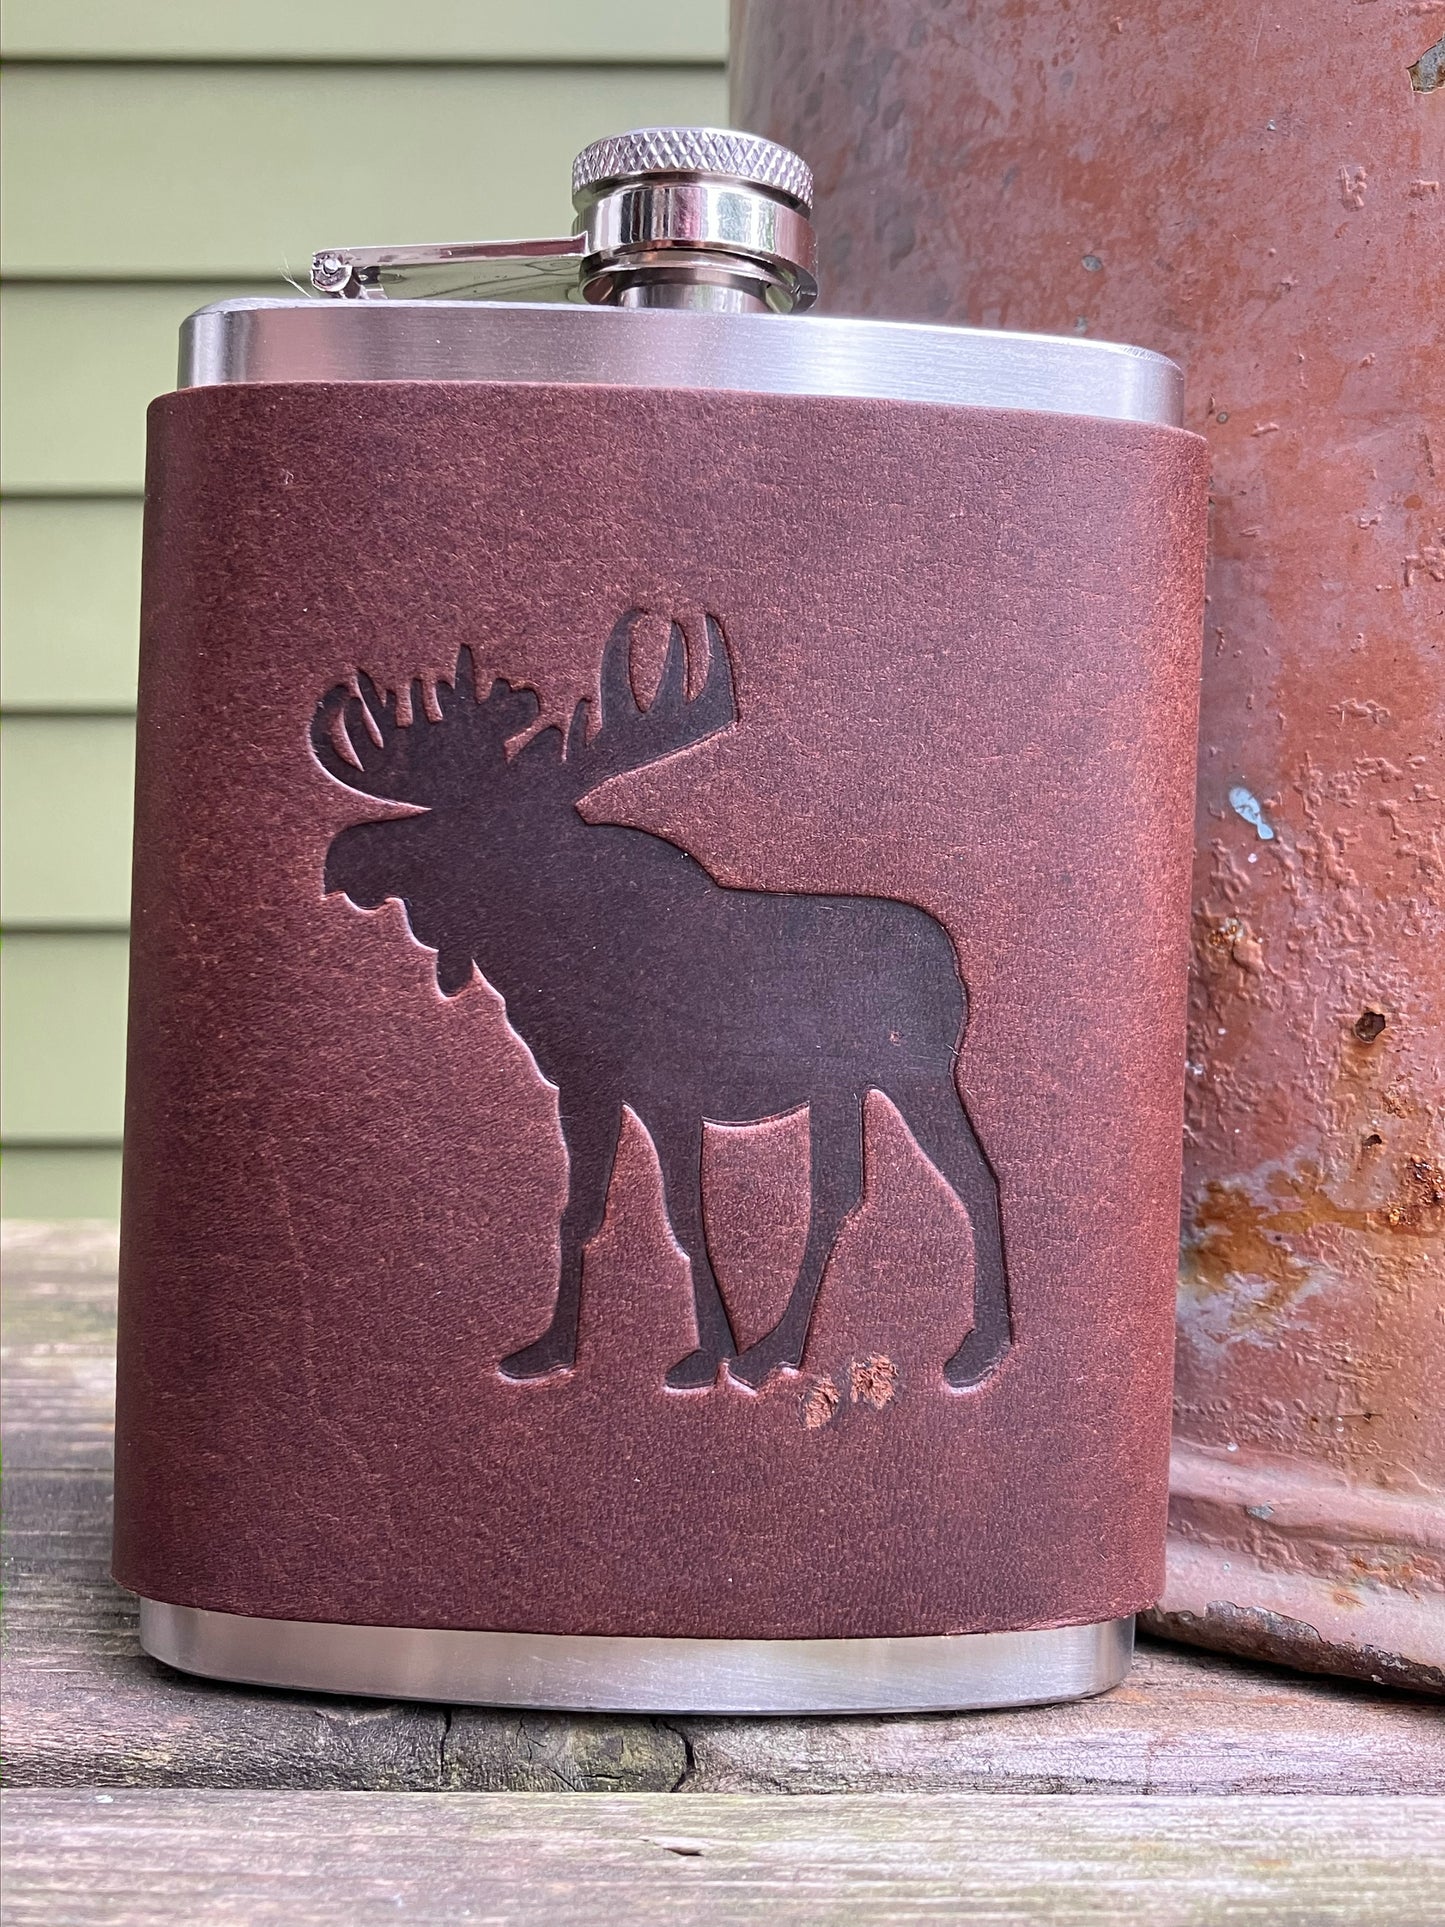 Leather Flask - Moose